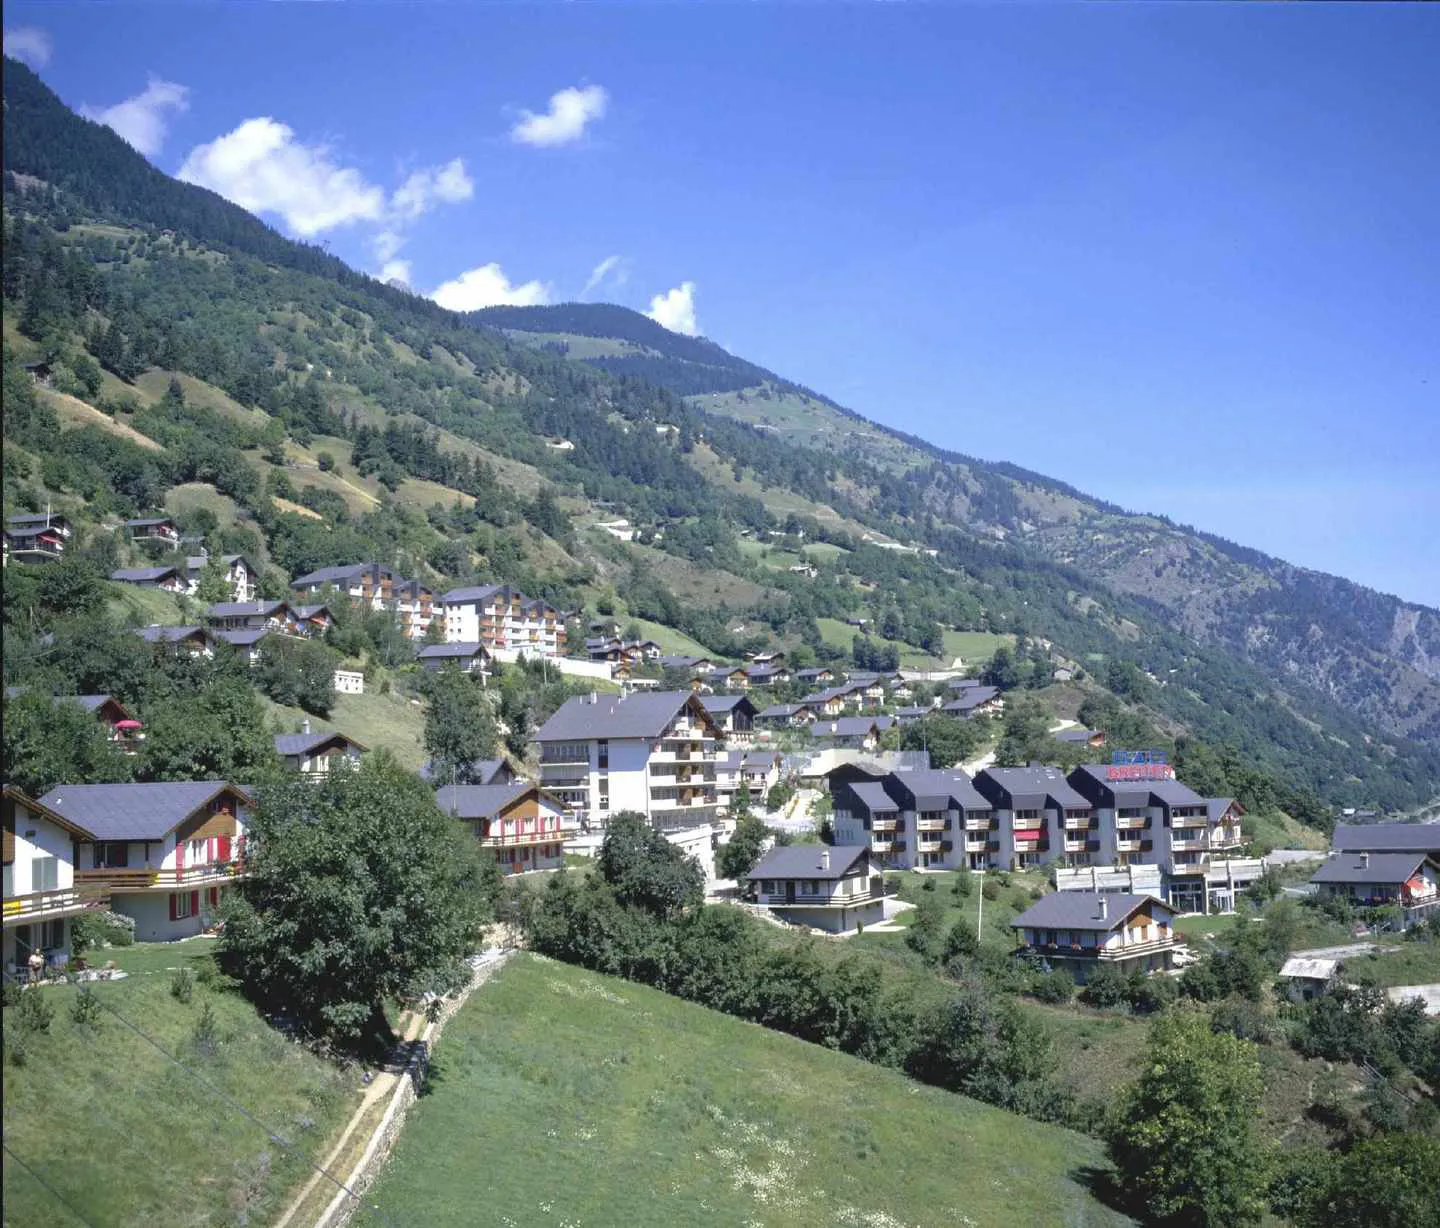 Wandern im UNESCO Weltnaturerbe Schweizer Alpen